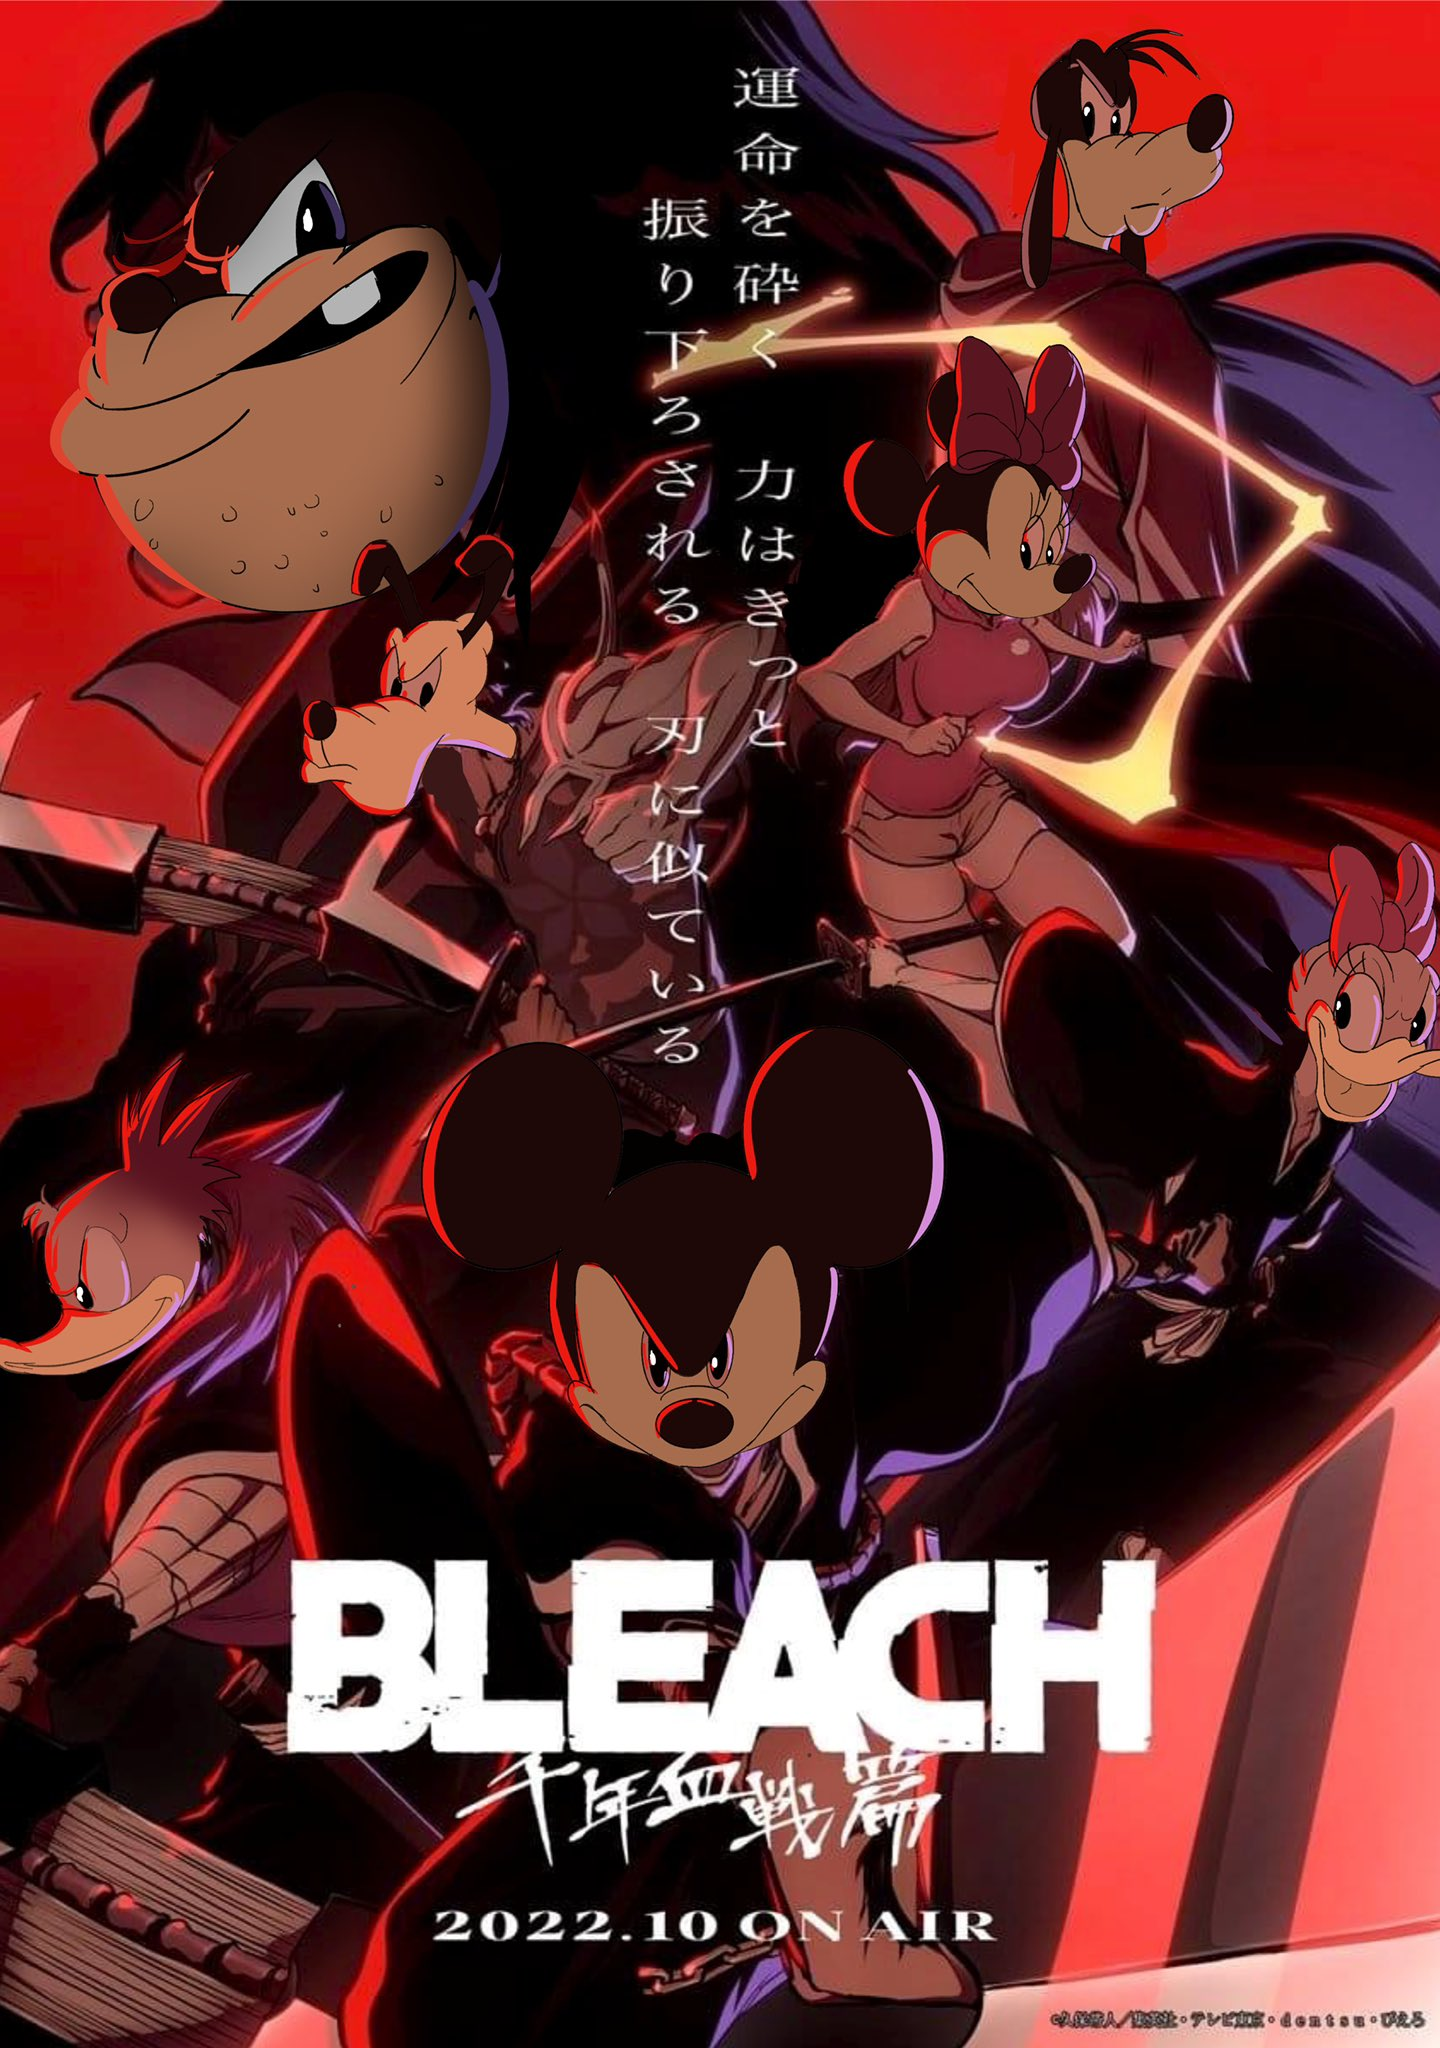 Where can you watch Bleach: Thousand-Year Blood War??? Crunchyroll?  Disney+? Hulu? 